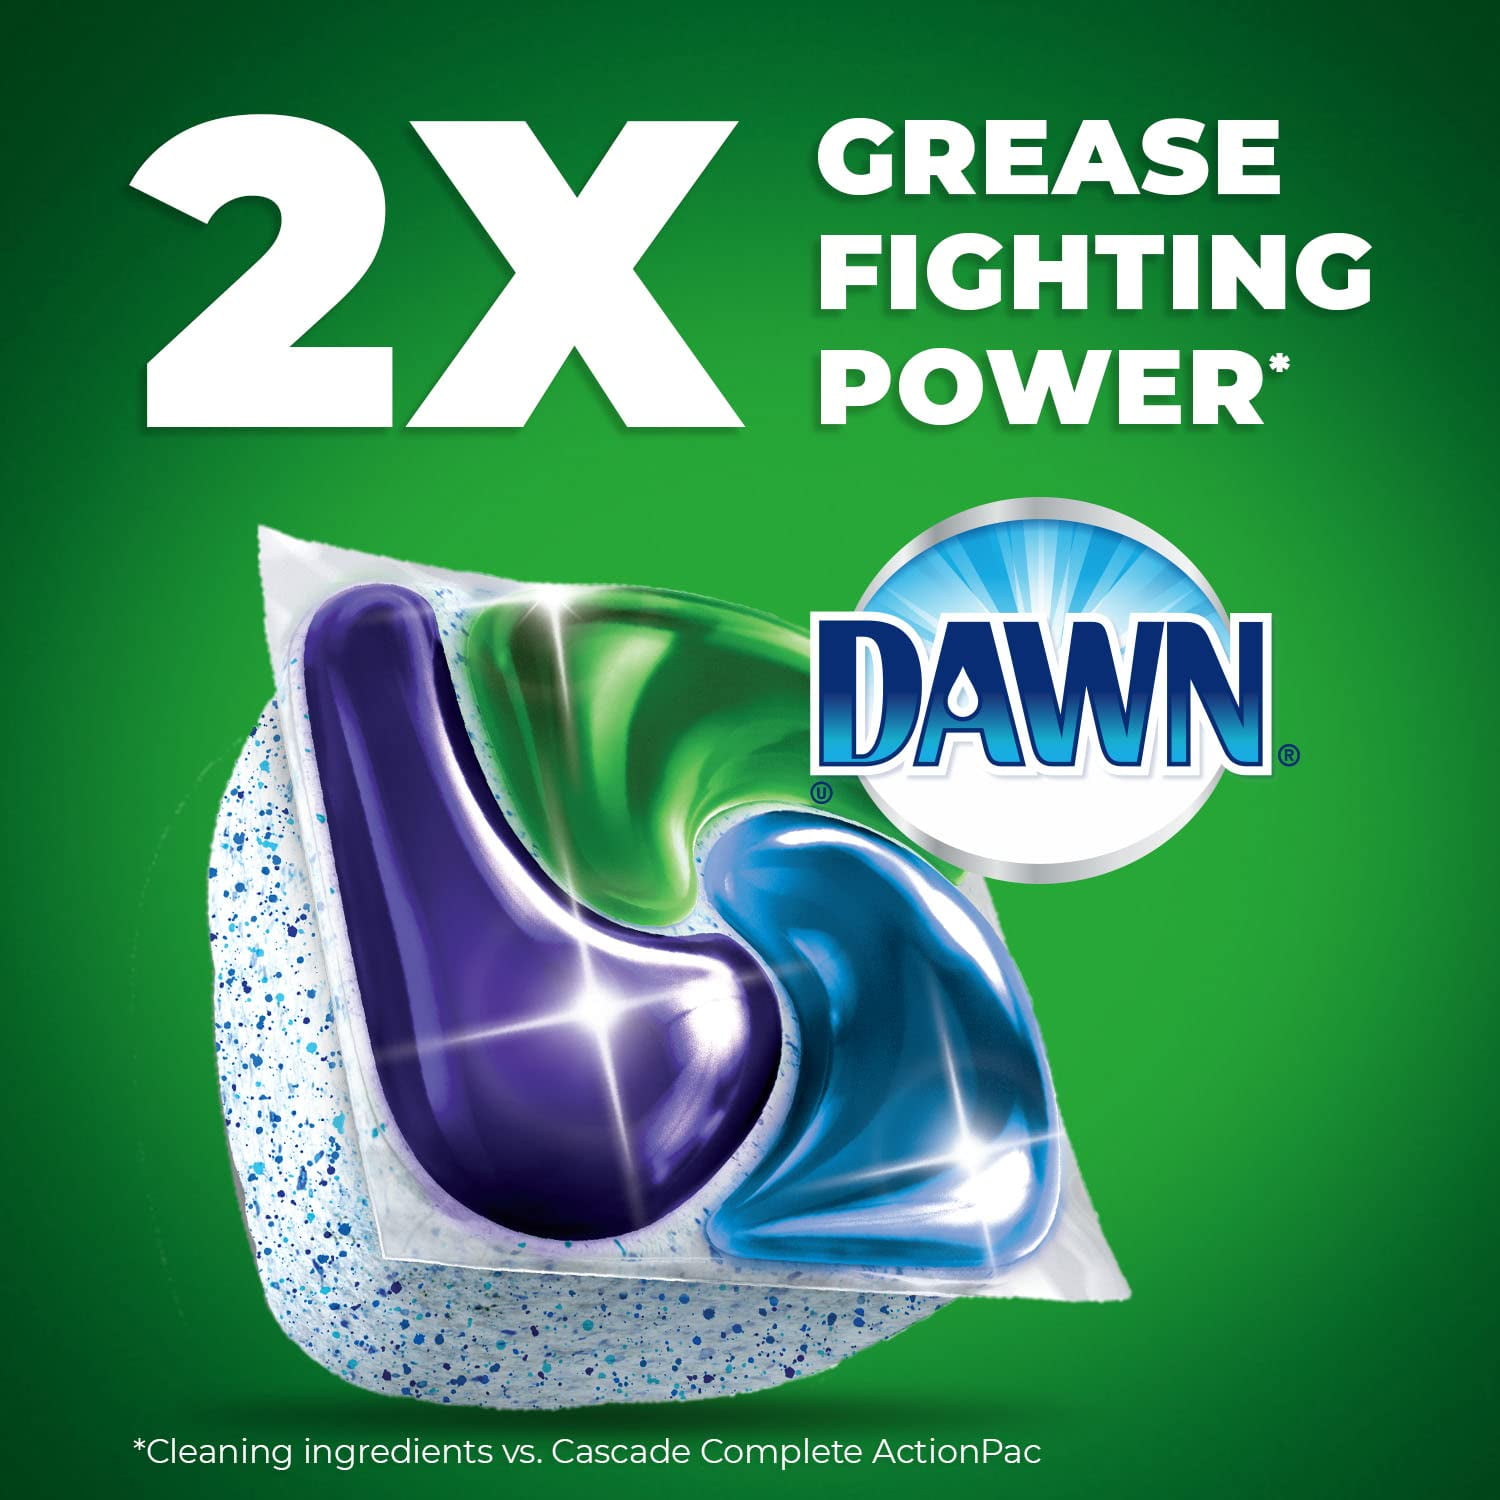 Cascade Platinum Plus Fresh ActionPacs Dishwasher Detergent Pods, 17 ct -  Kroger